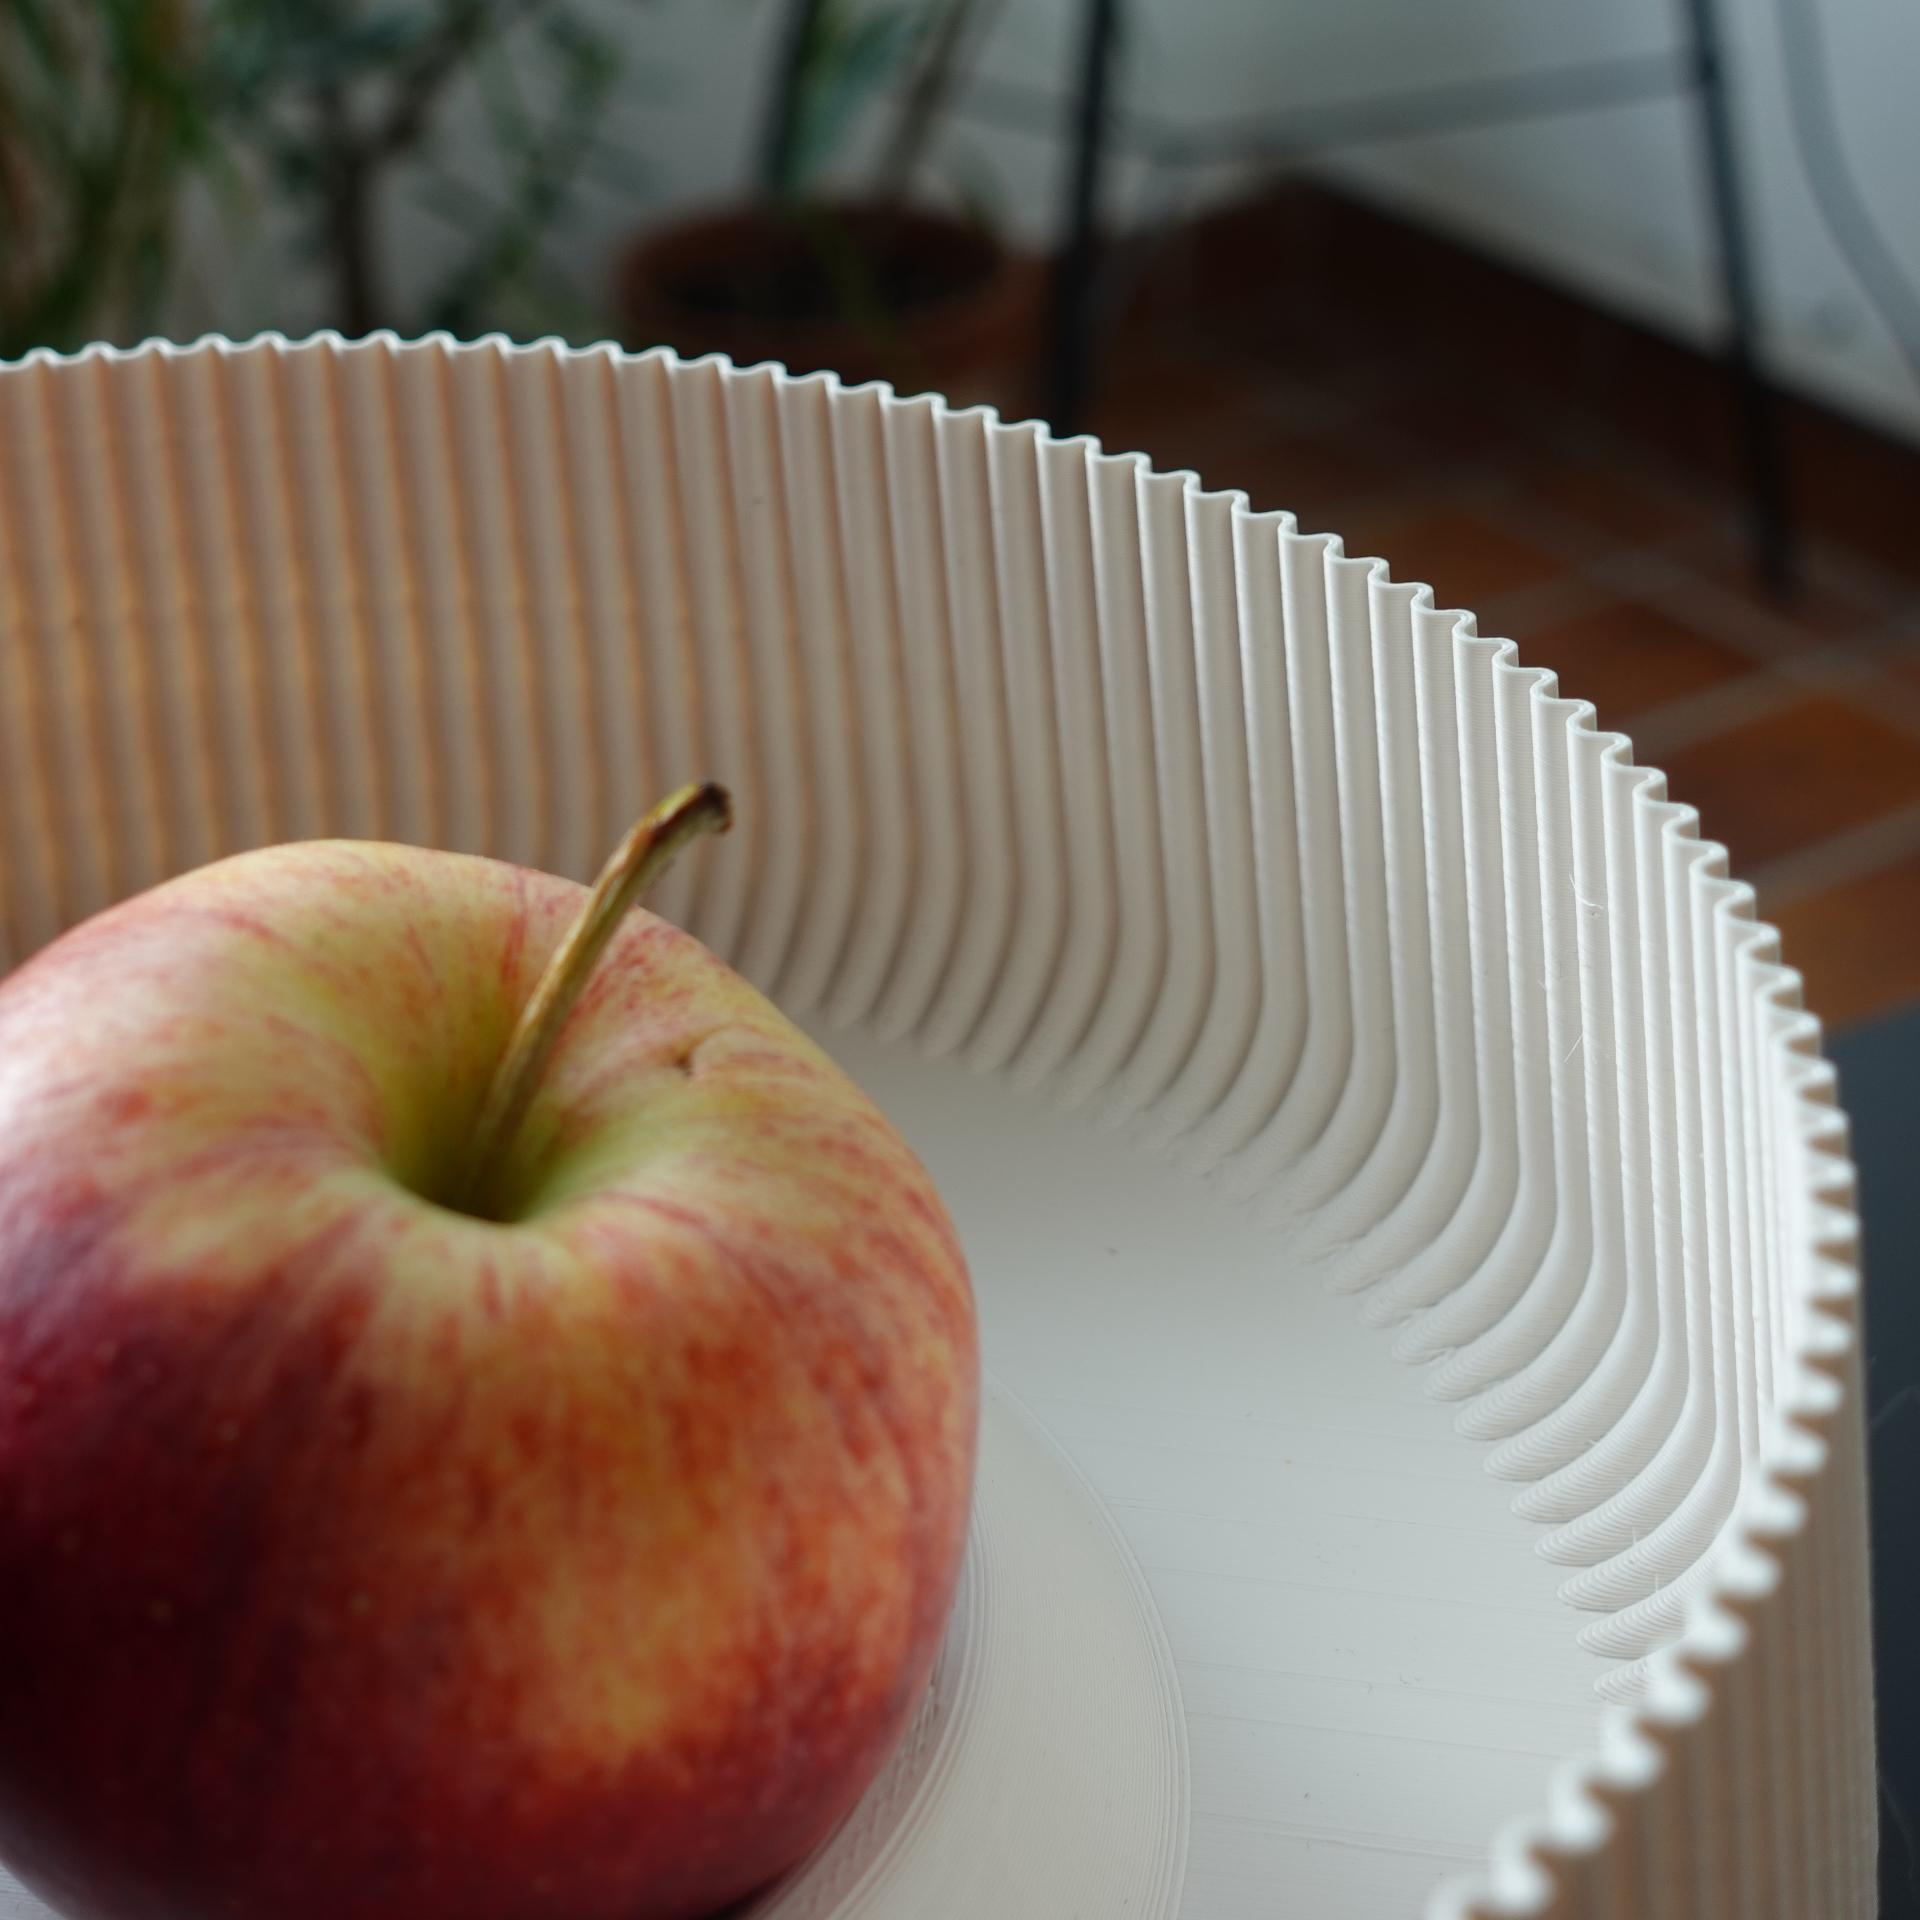 Fruit bowl “Fire” 3d model